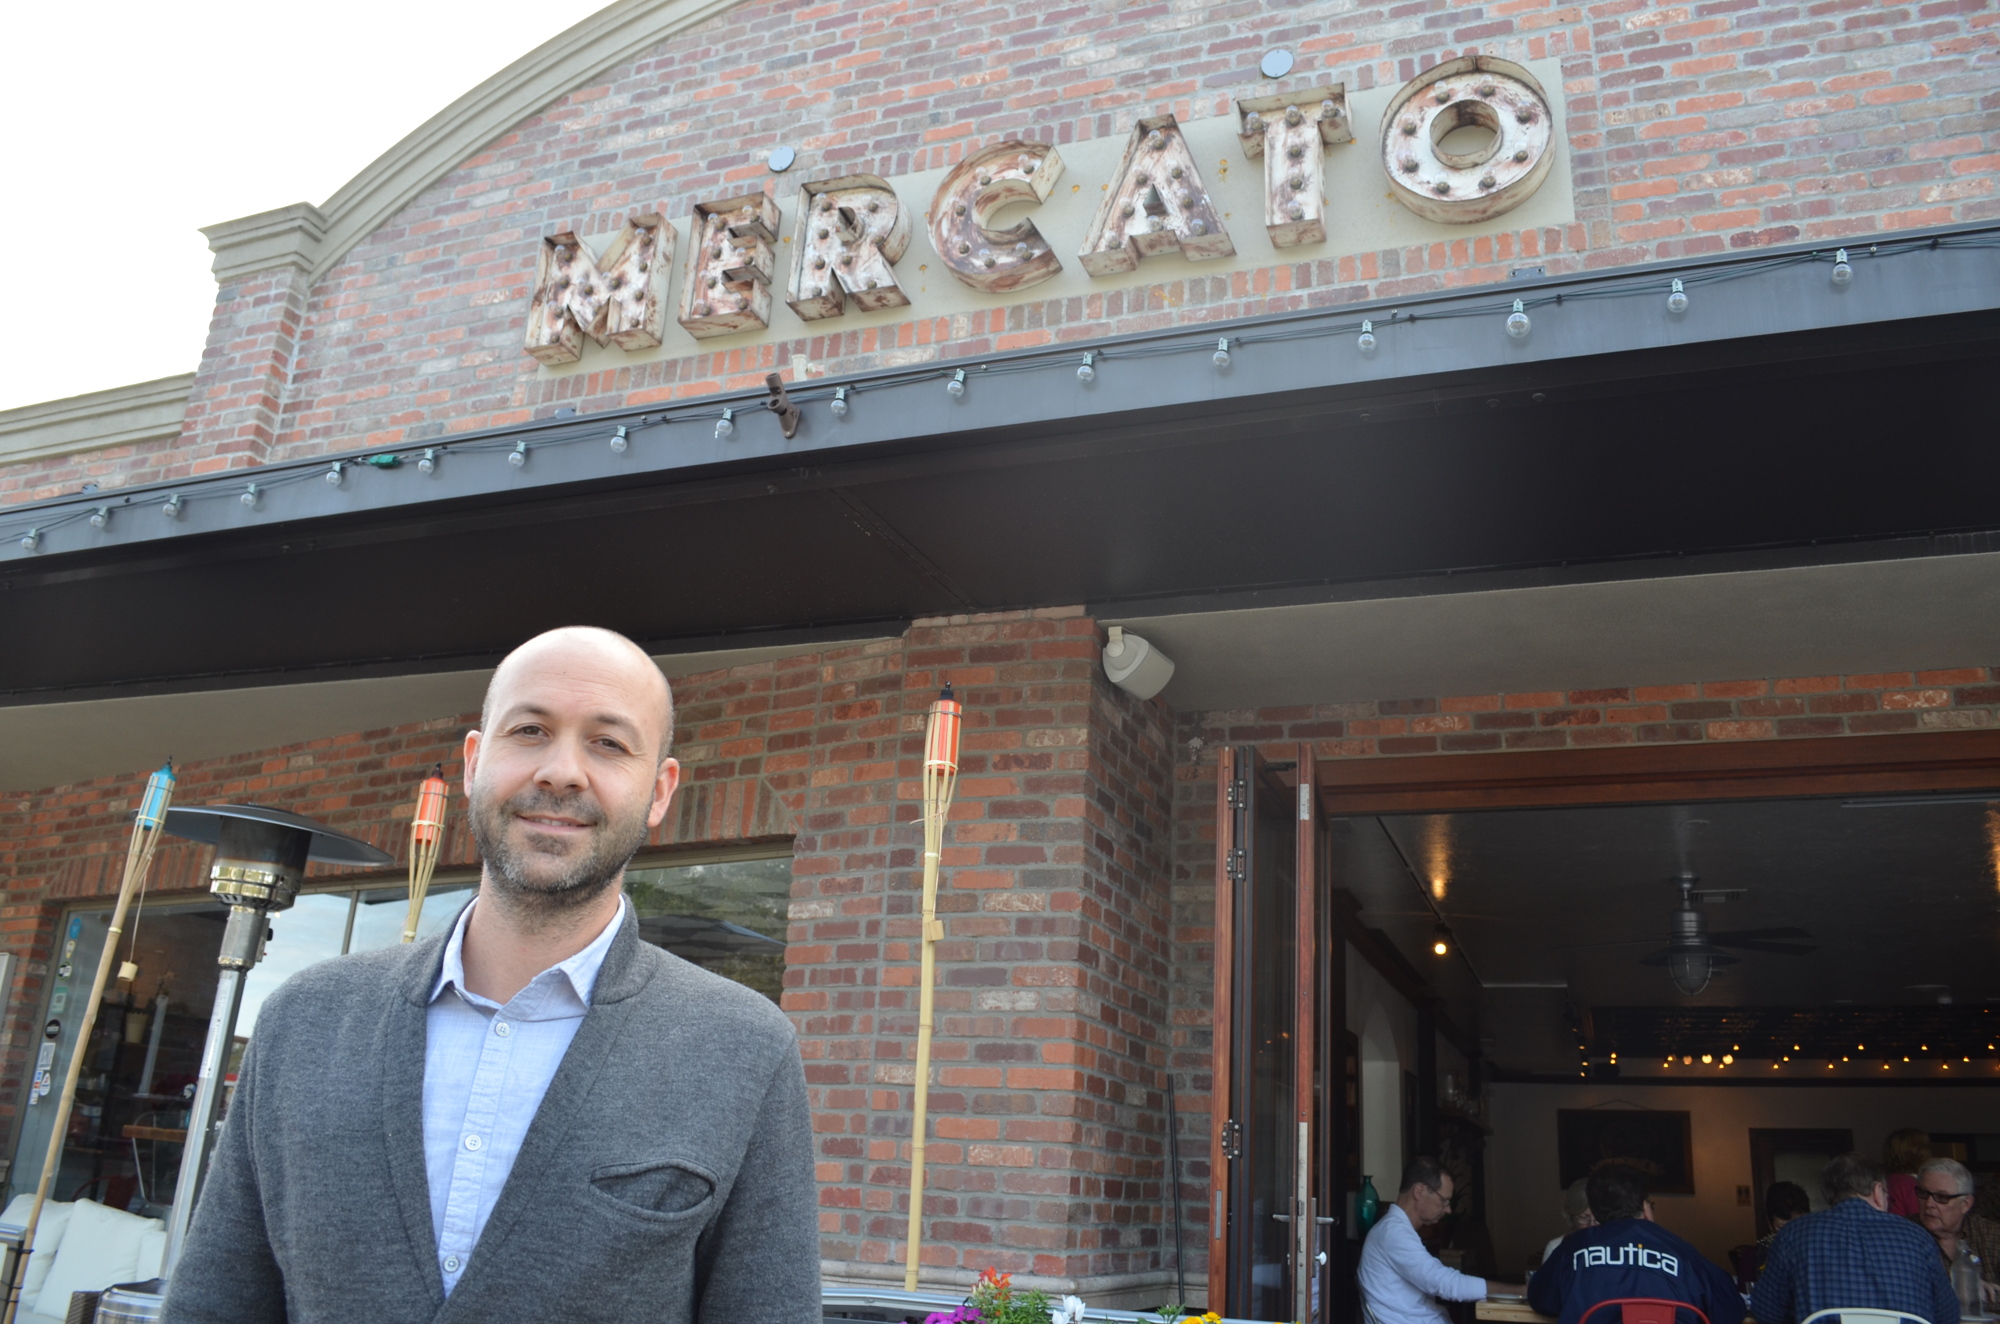 Mercato Pizzeria and Bar owner Alessandro Settimi